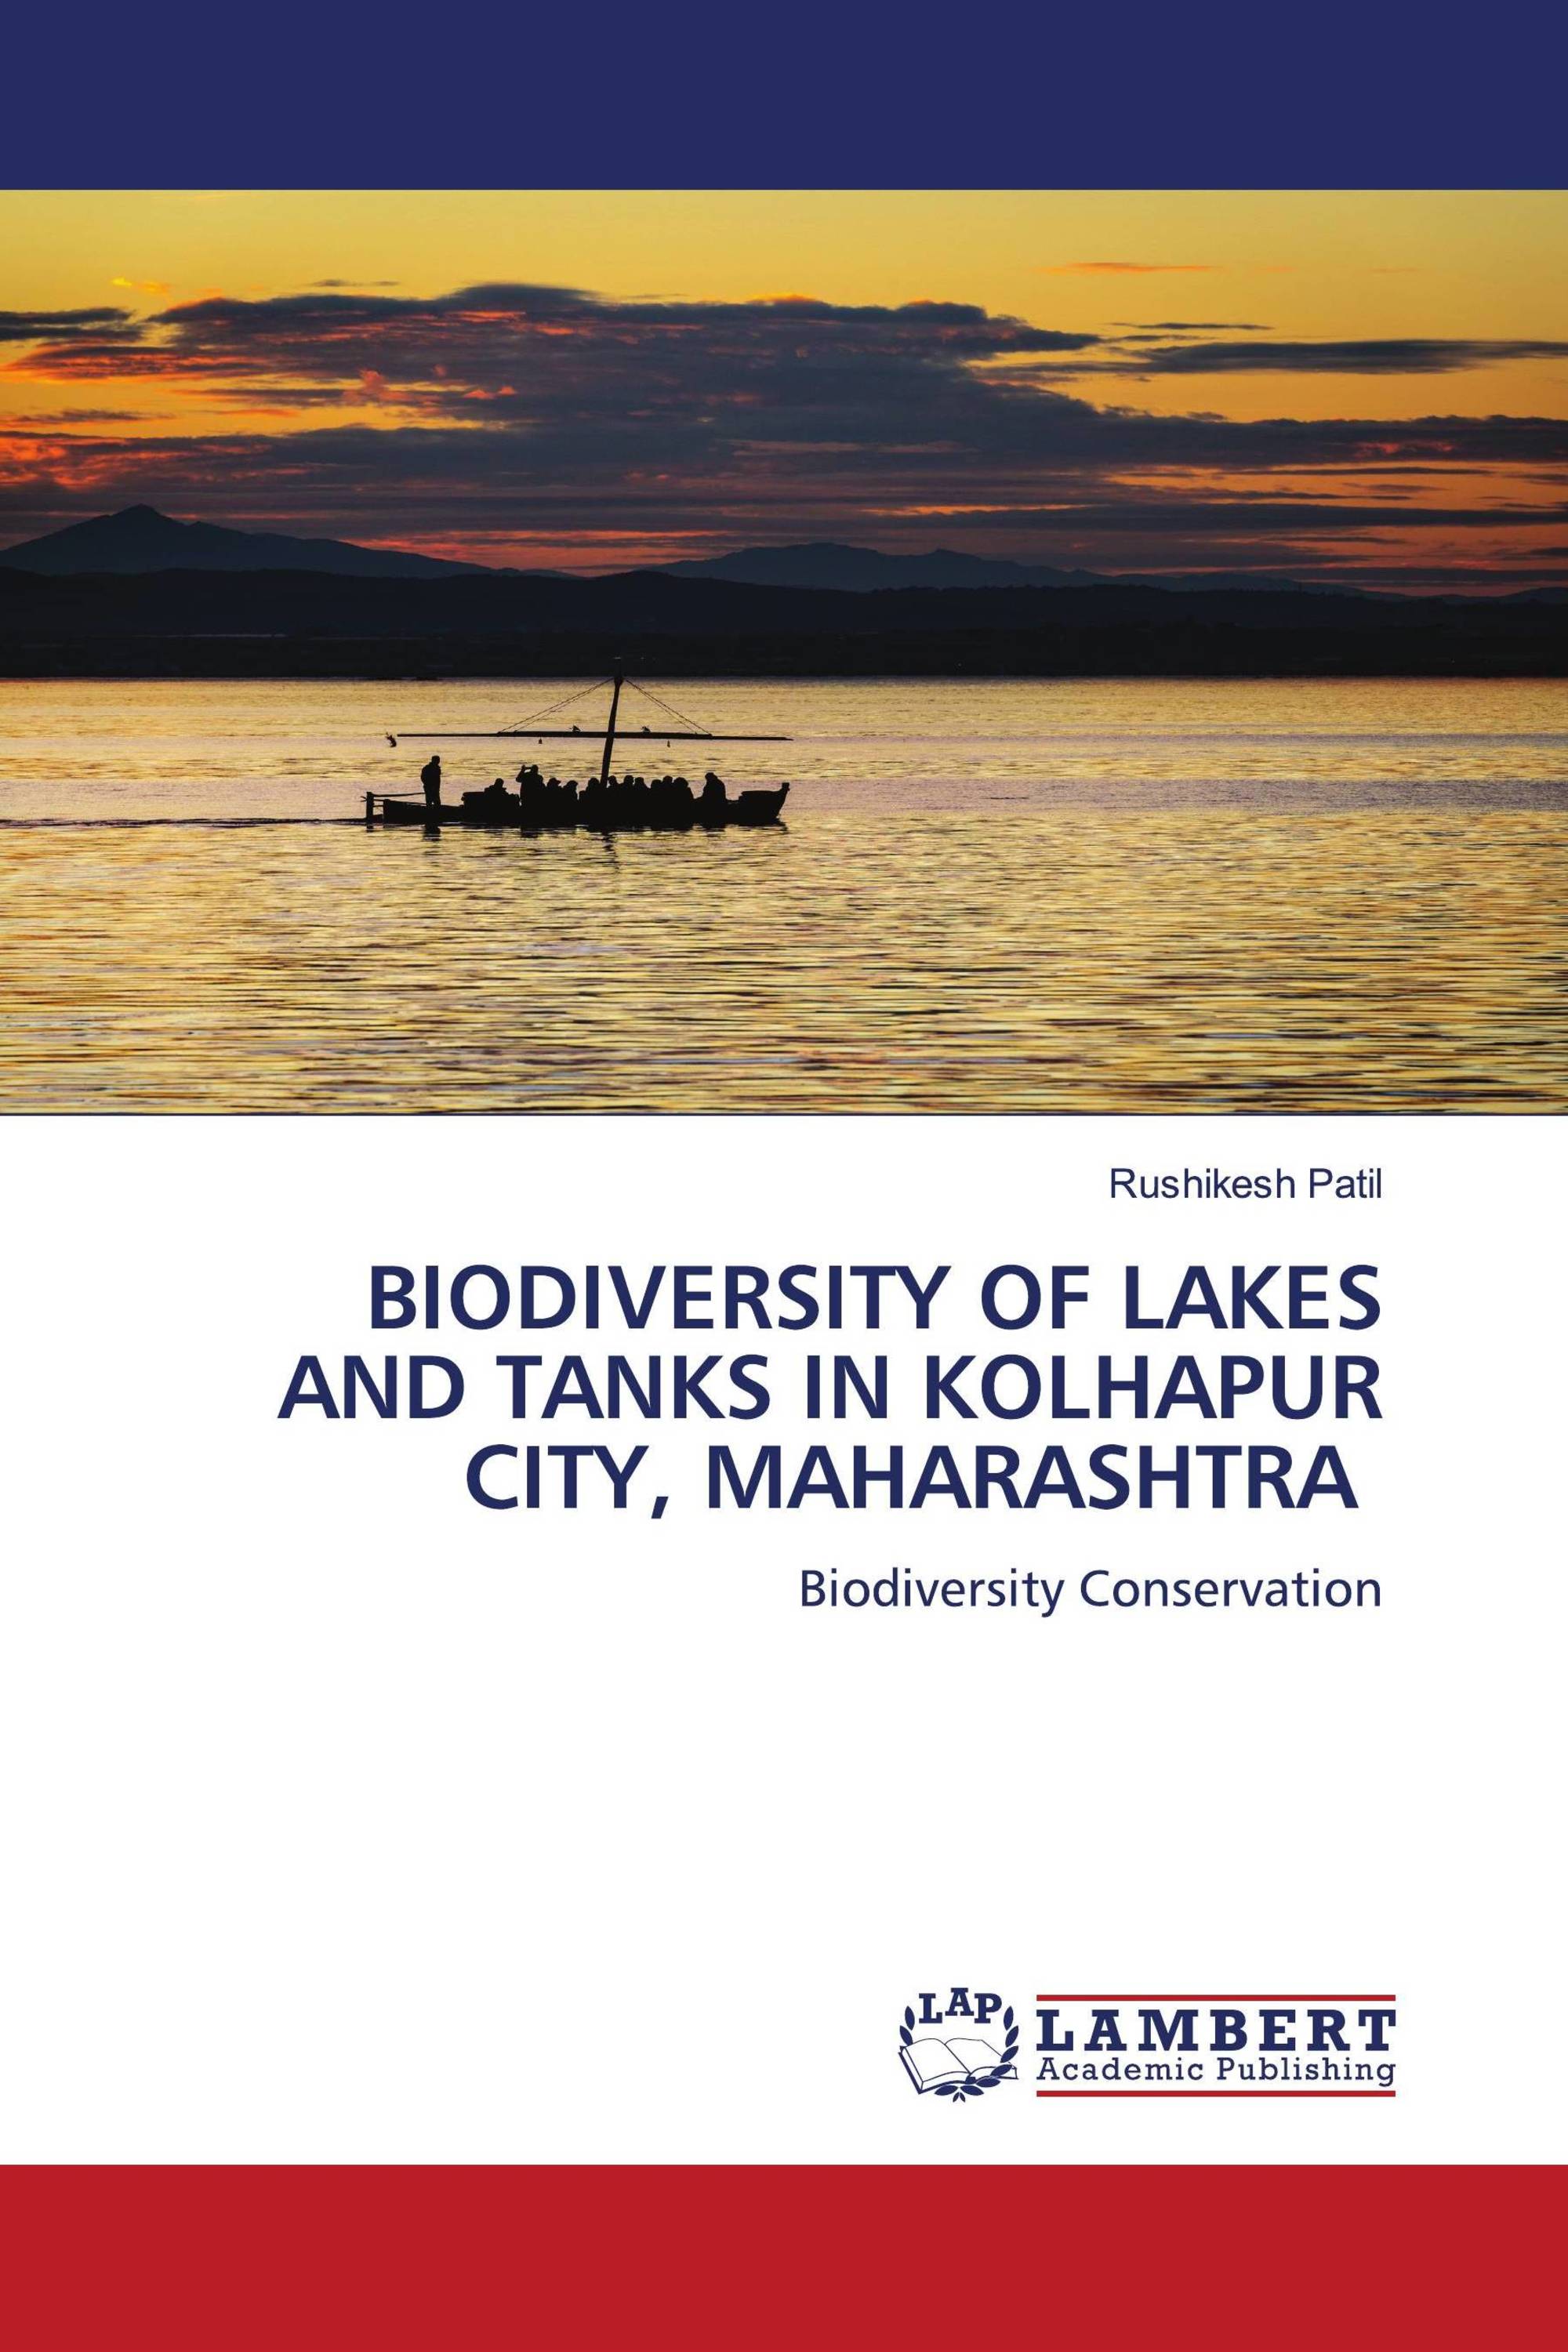 BIODIVERSITY OF LAKES AND TANKS IN KOLHAPUR CITY, MAHARASHTRA